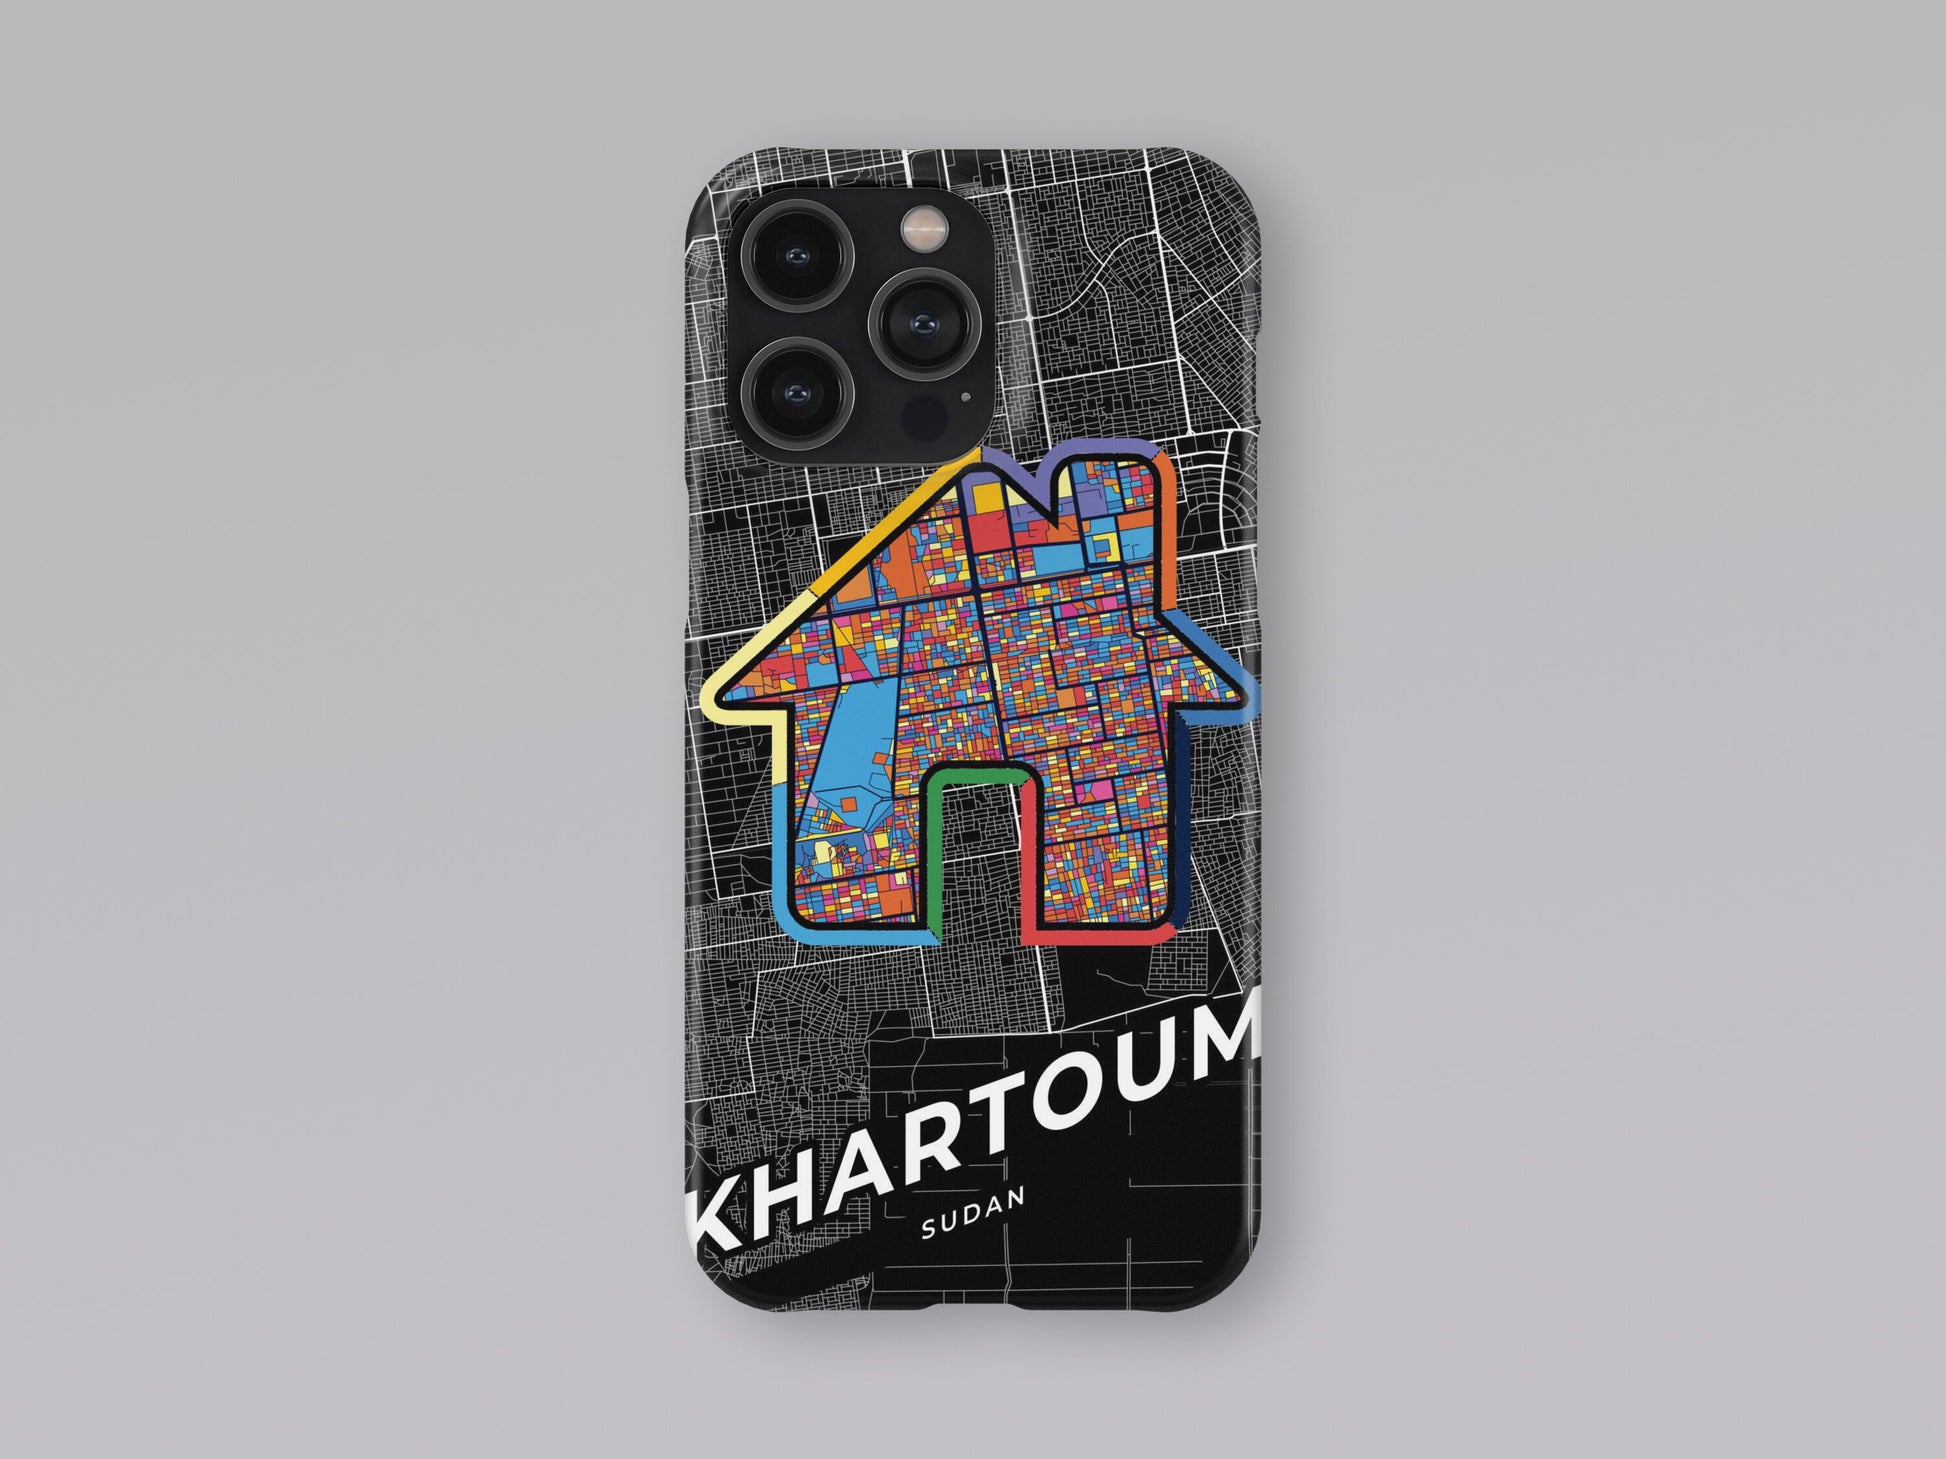 Khartoum Sudan slim phone case with colorful icon. Birthday, wedding or housewarming gift. Couple match cases. 3